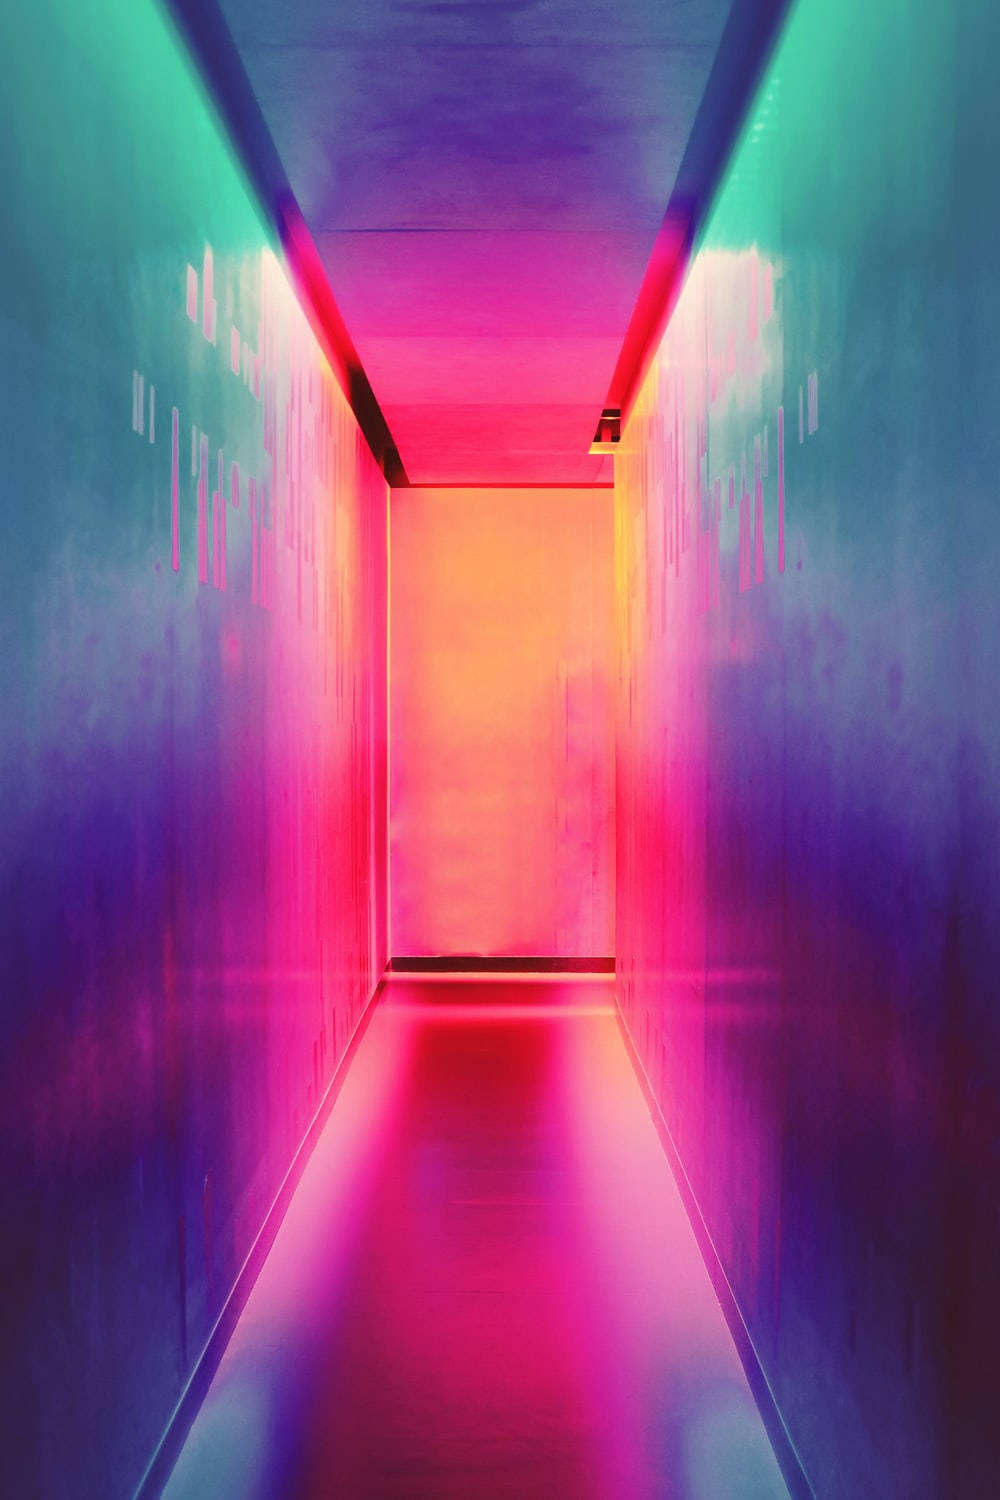 The Neon Hallway Iphone 11 Background